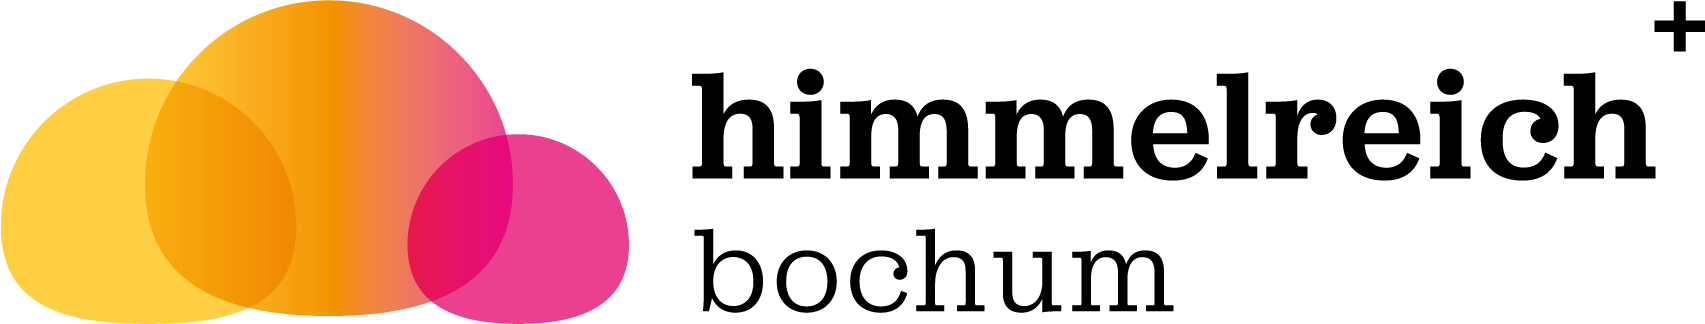 himmelreich_bochum_horizontal_logo_4c